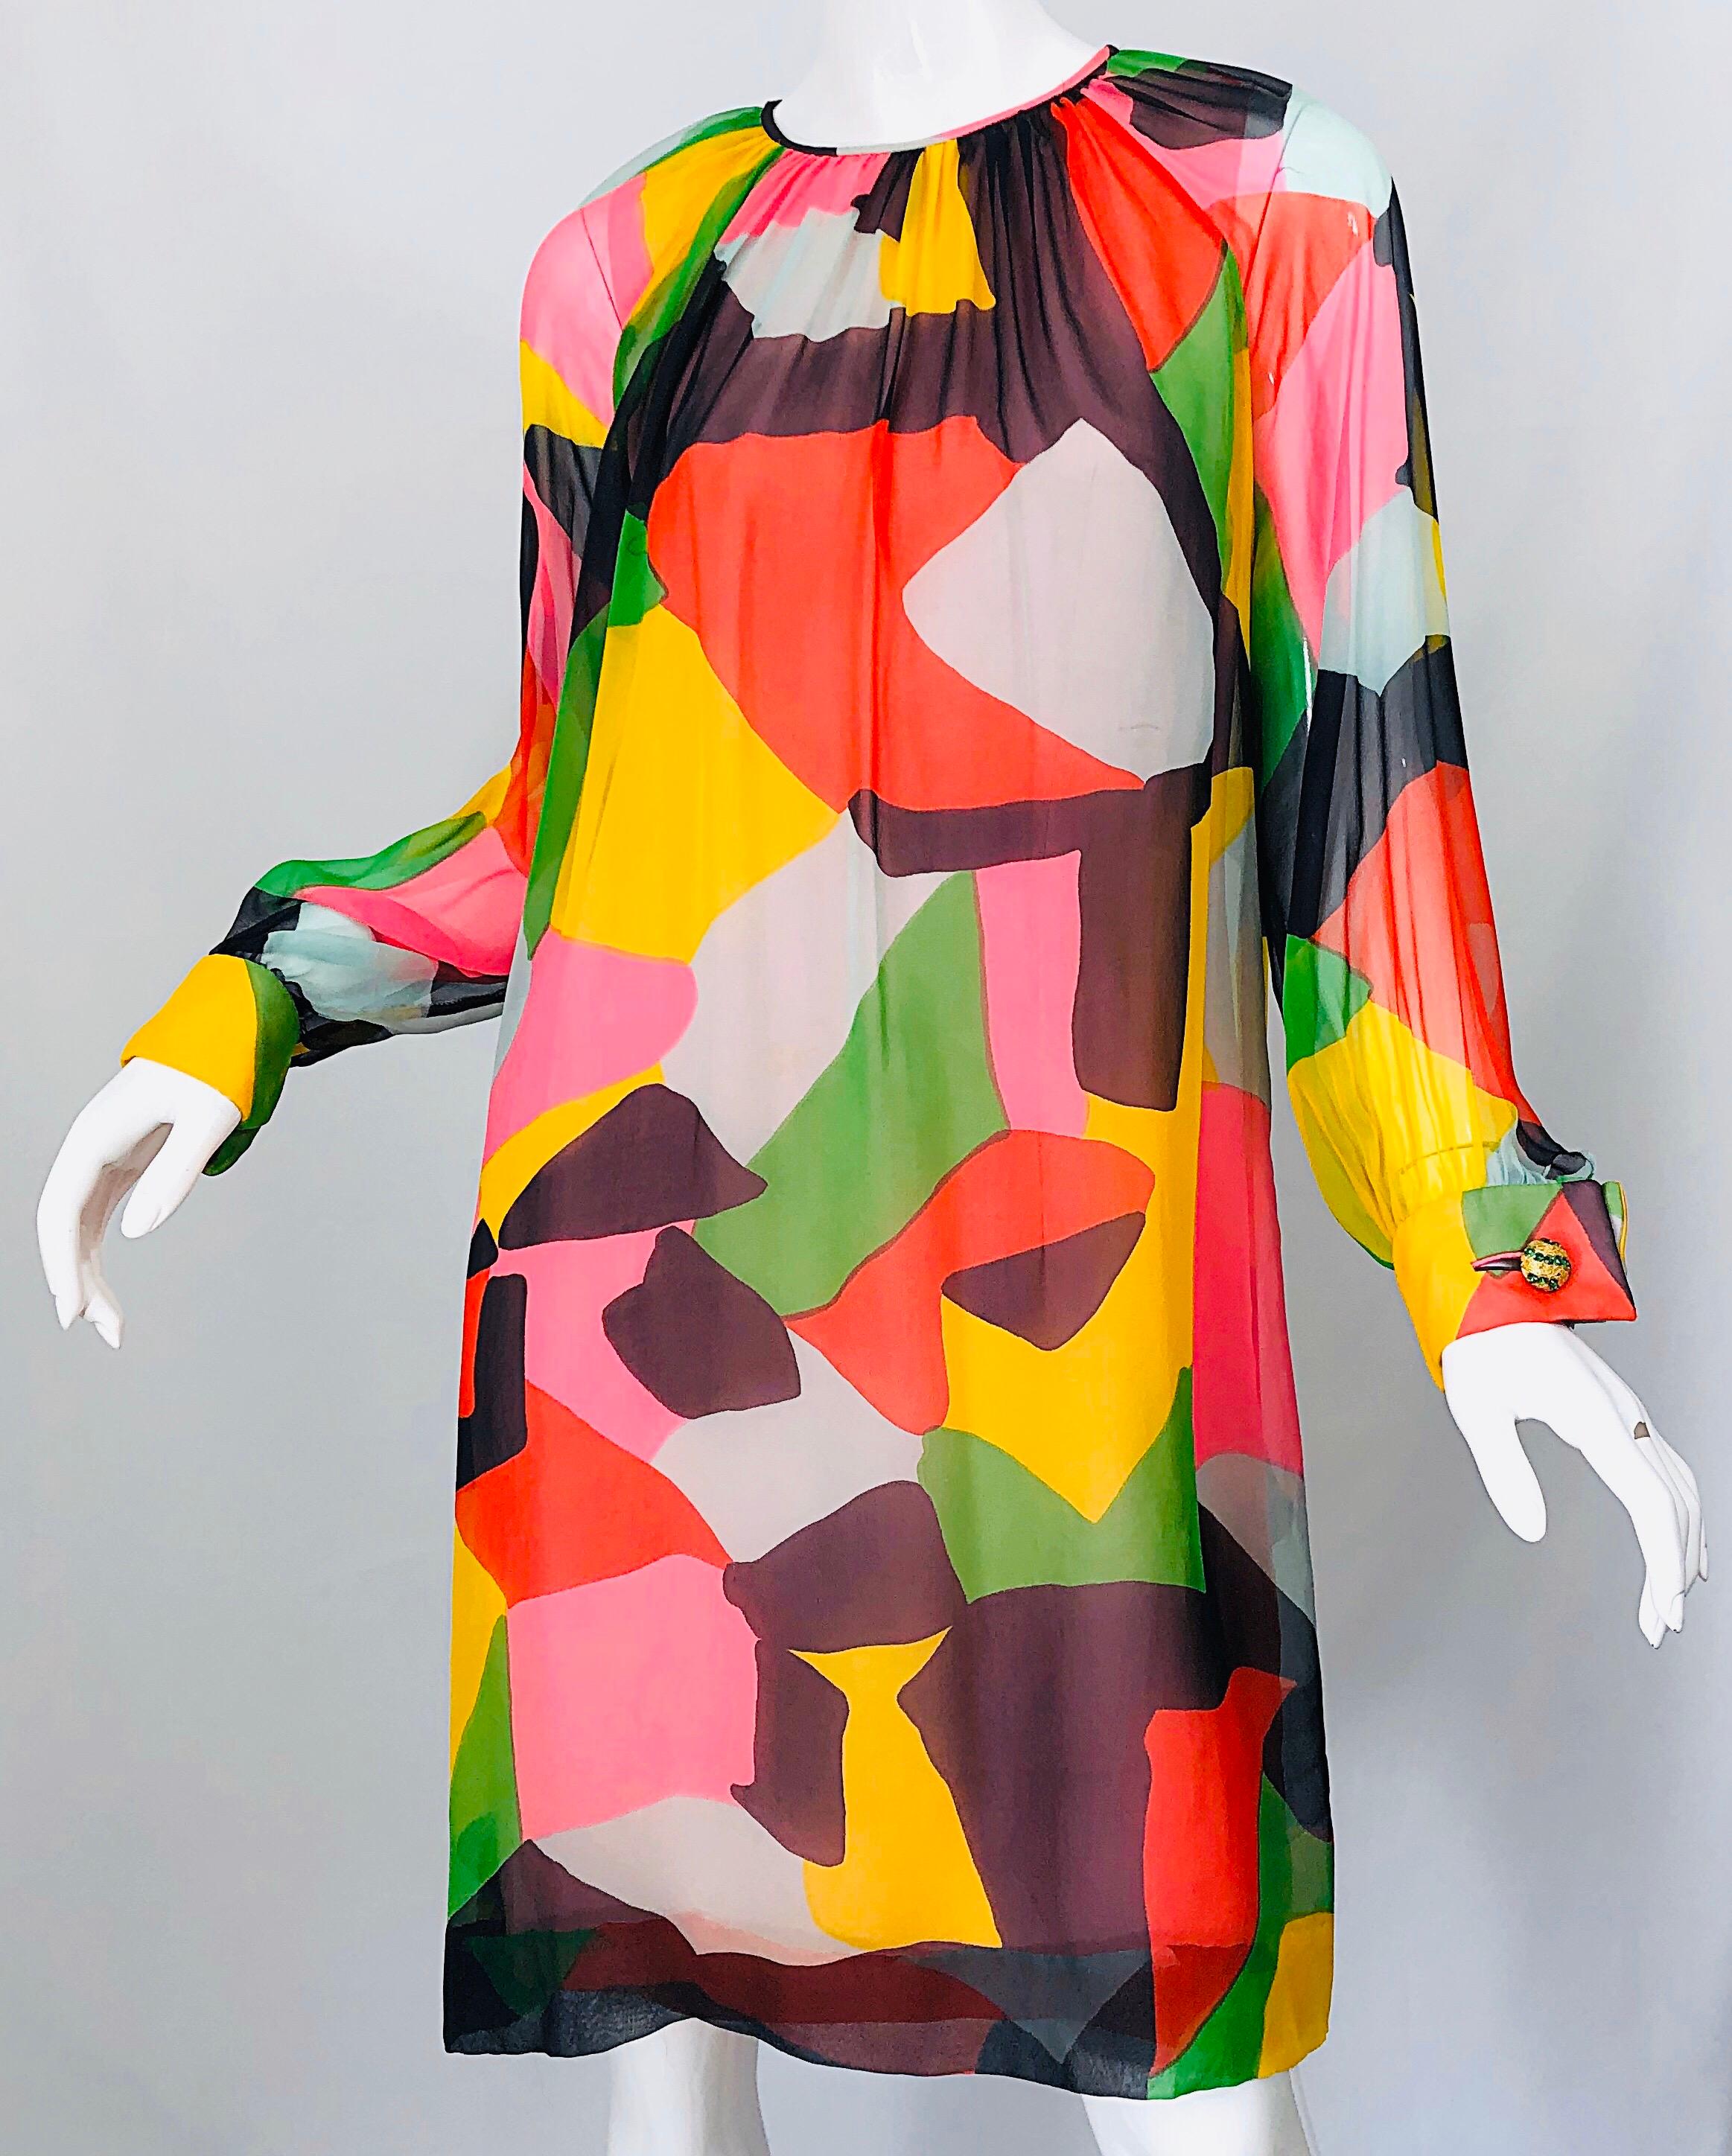 60s print dress